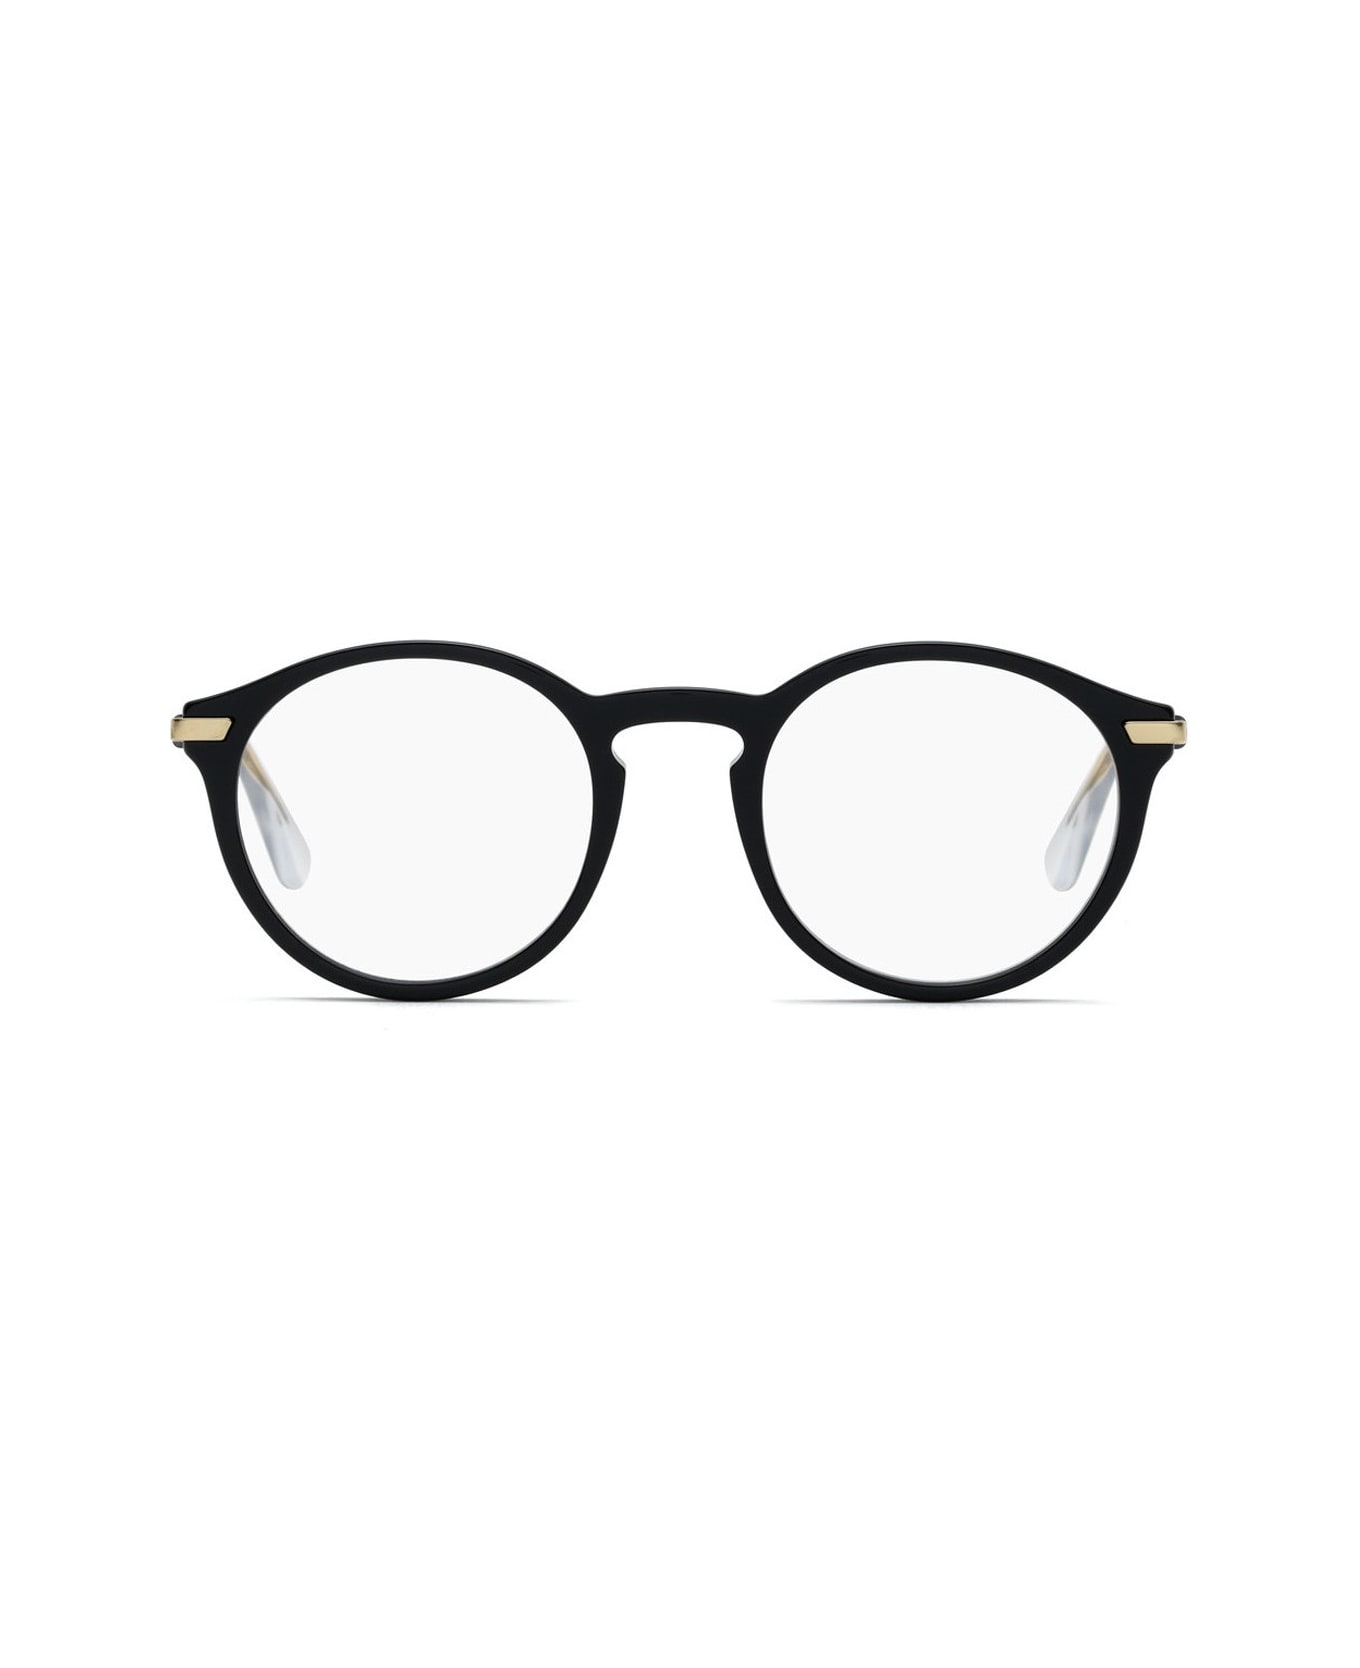 Dior Eyewear Essence5 Glasses - Nero